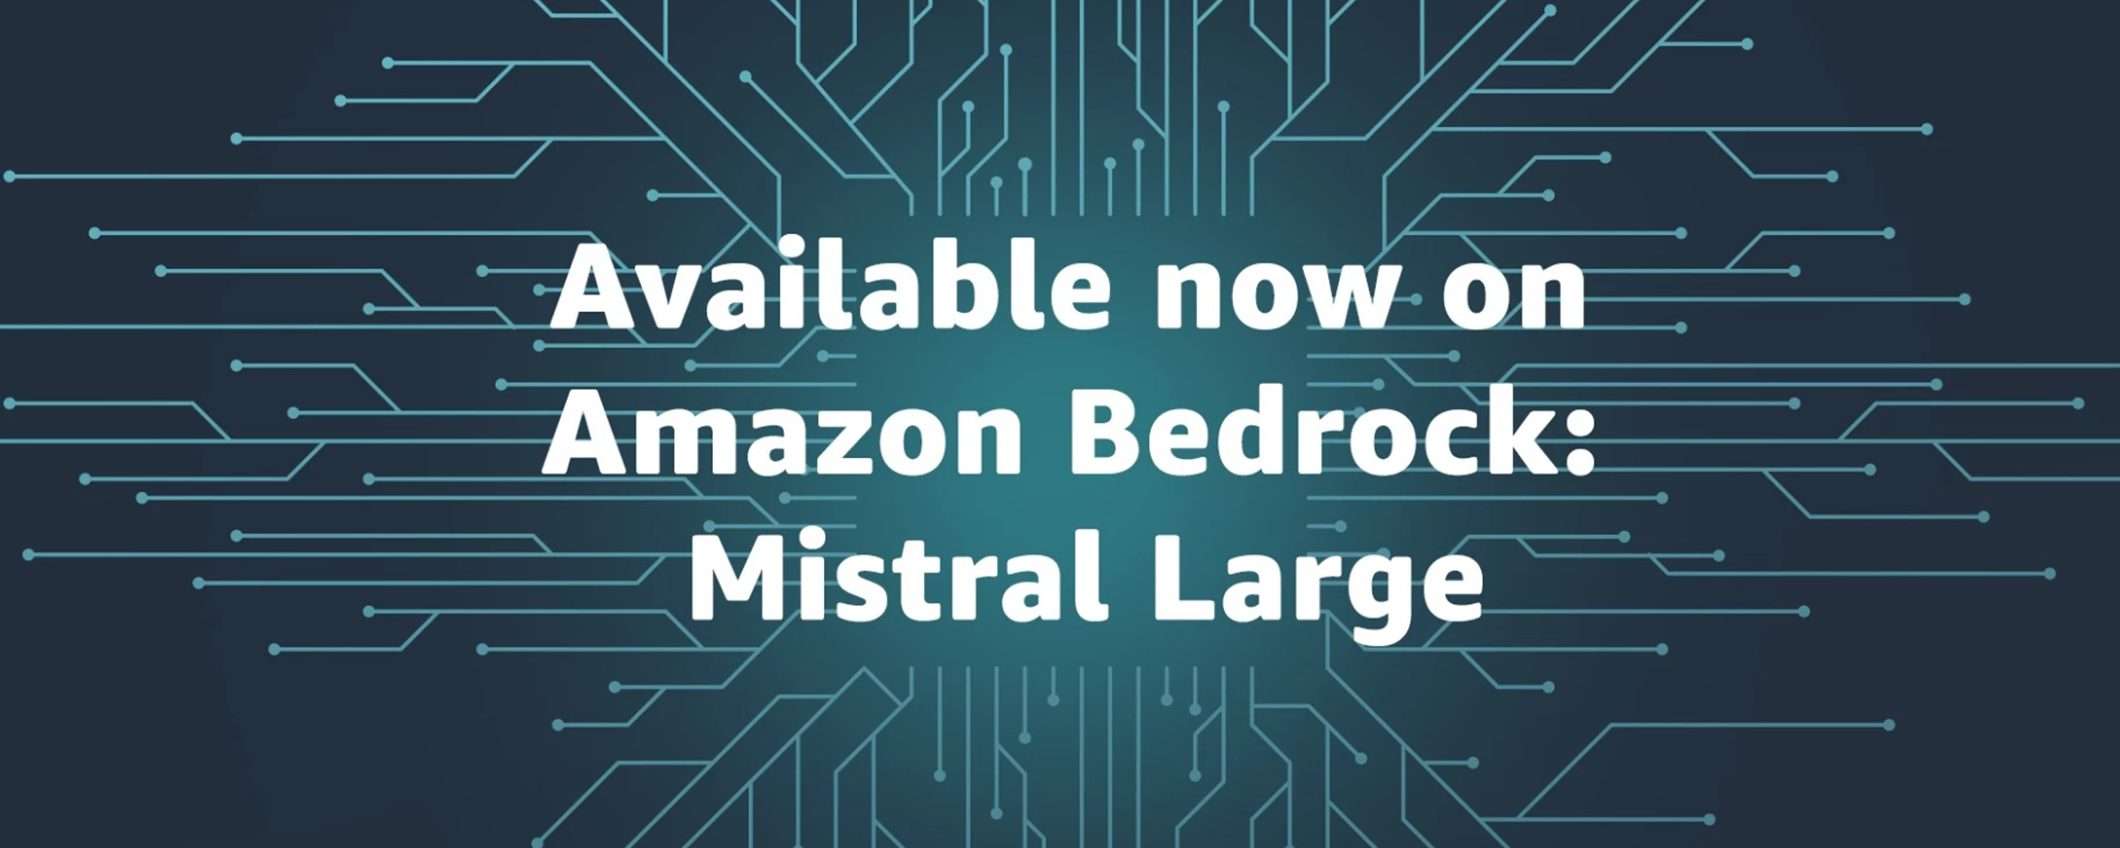 AWS rilascia Mistral Large per Amazon Bedrock